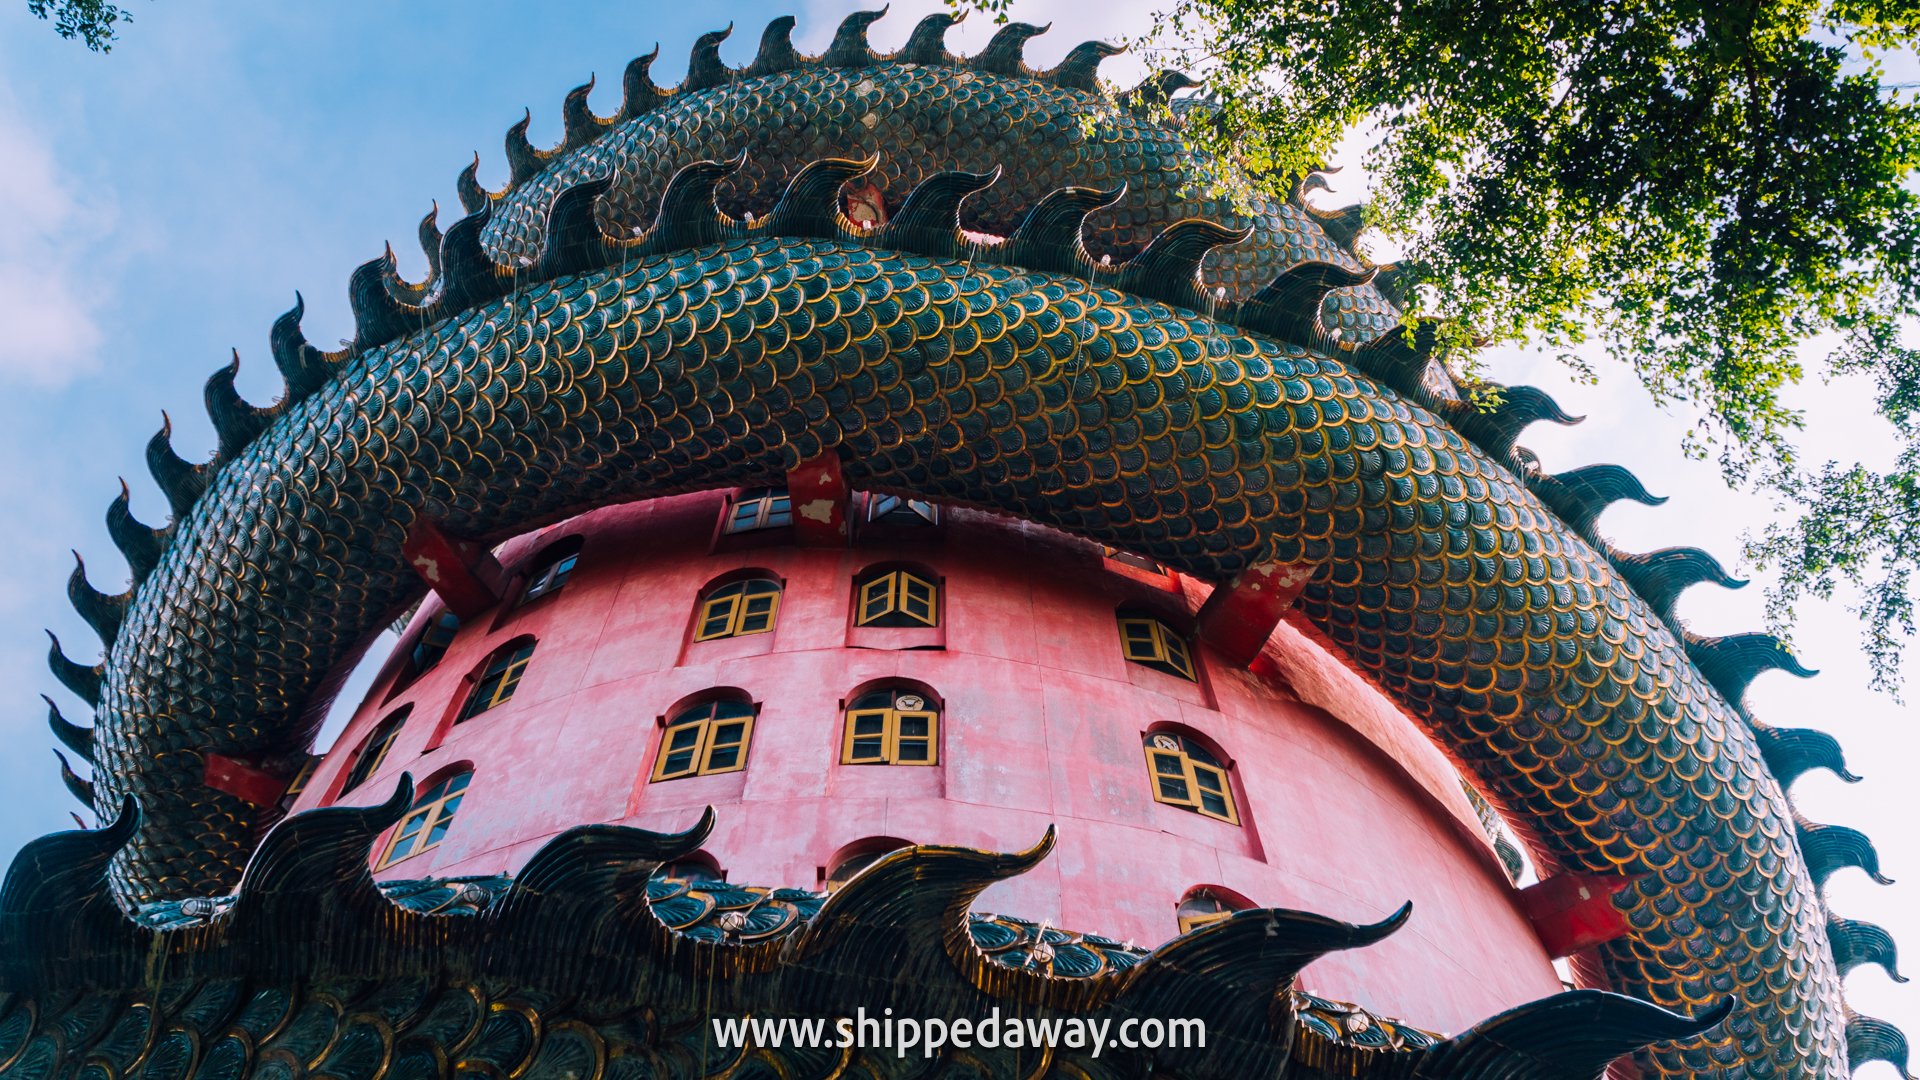 Architecture of Dragon Temple, Bangkok, Thailand